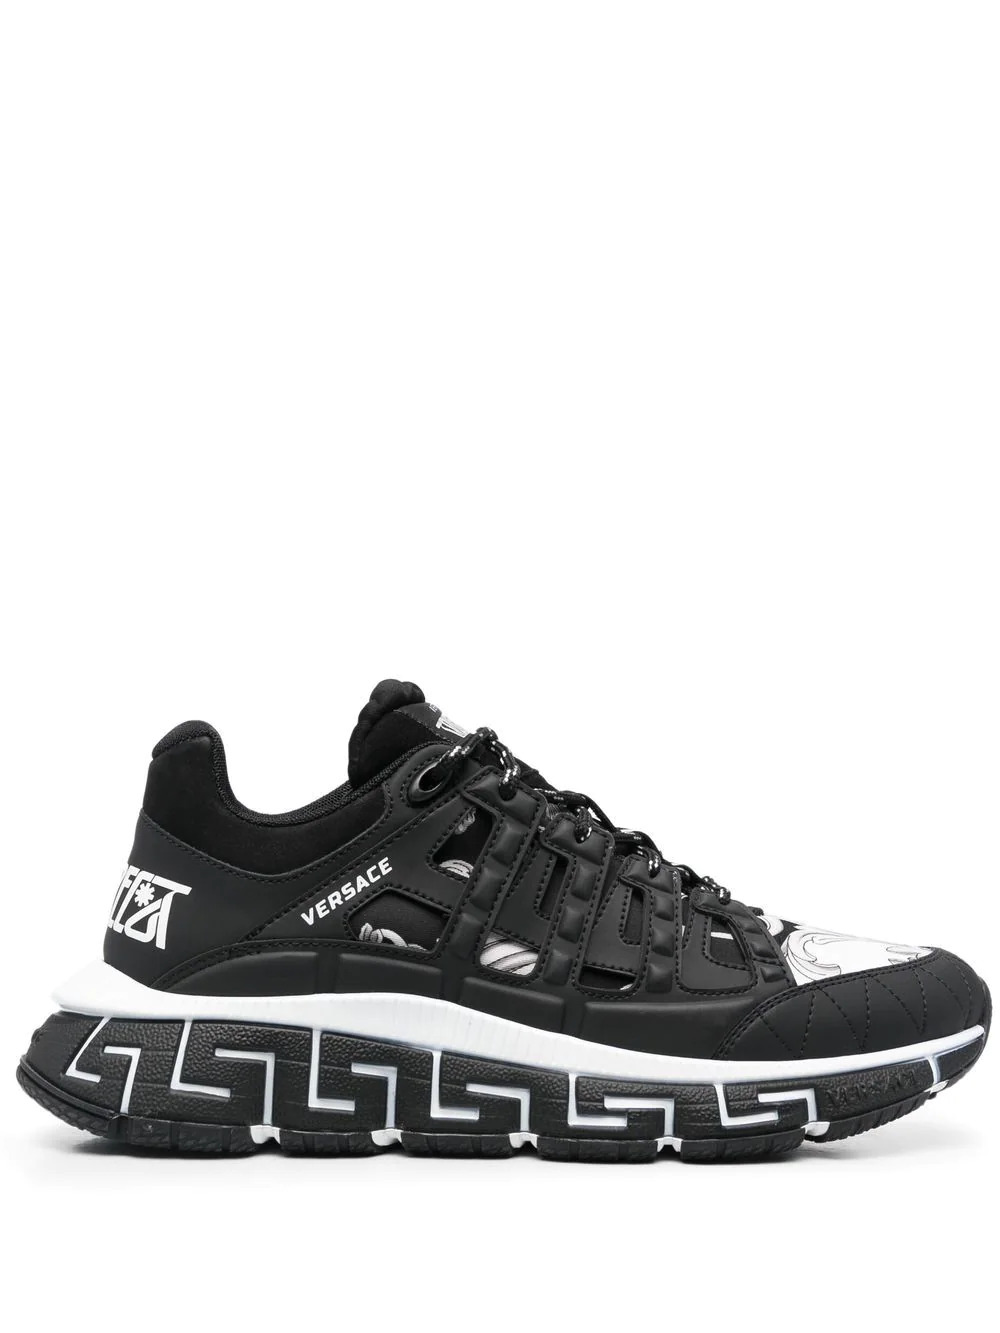 Schwarze Trigreca-Sneakers